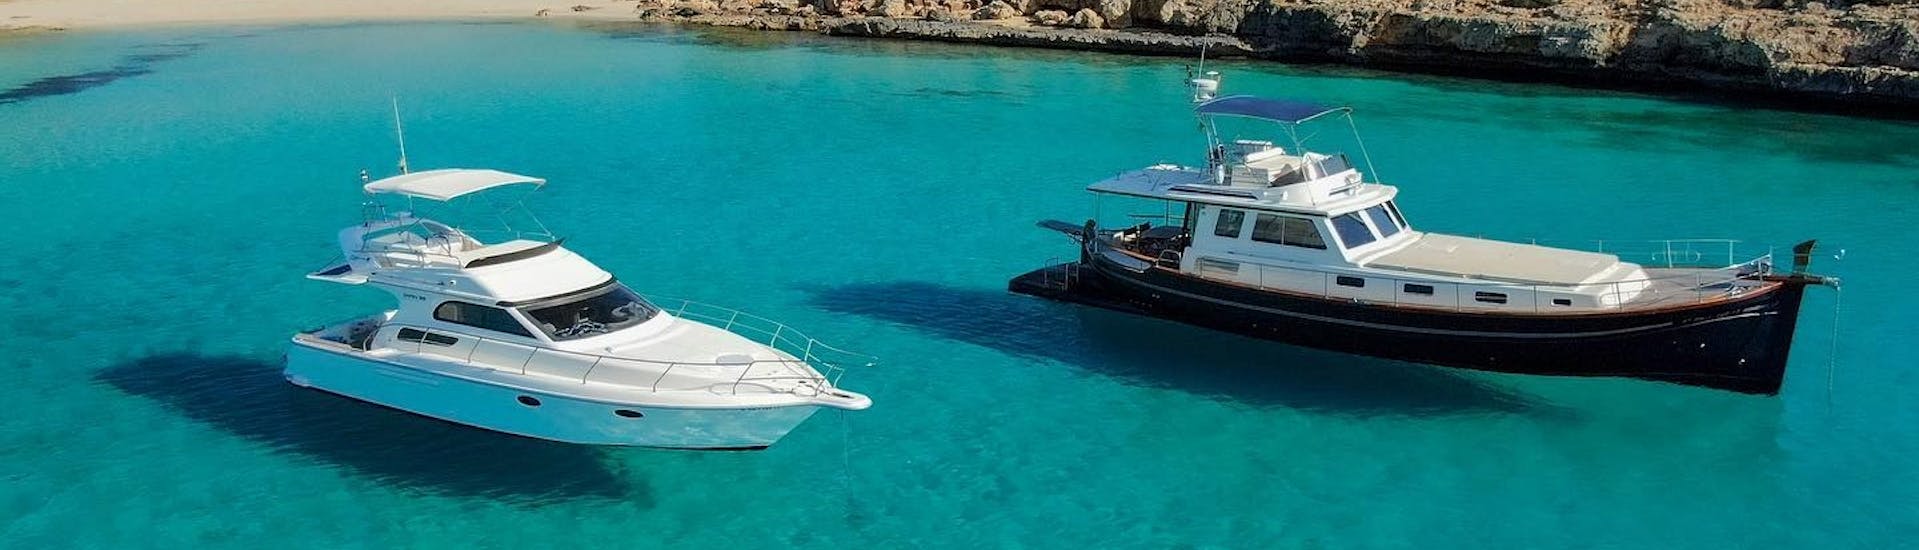 Unsere Yacht während der Private Yachttour nach Cala Varques & Cala Virgili mit Charters Llevant Mallorca.